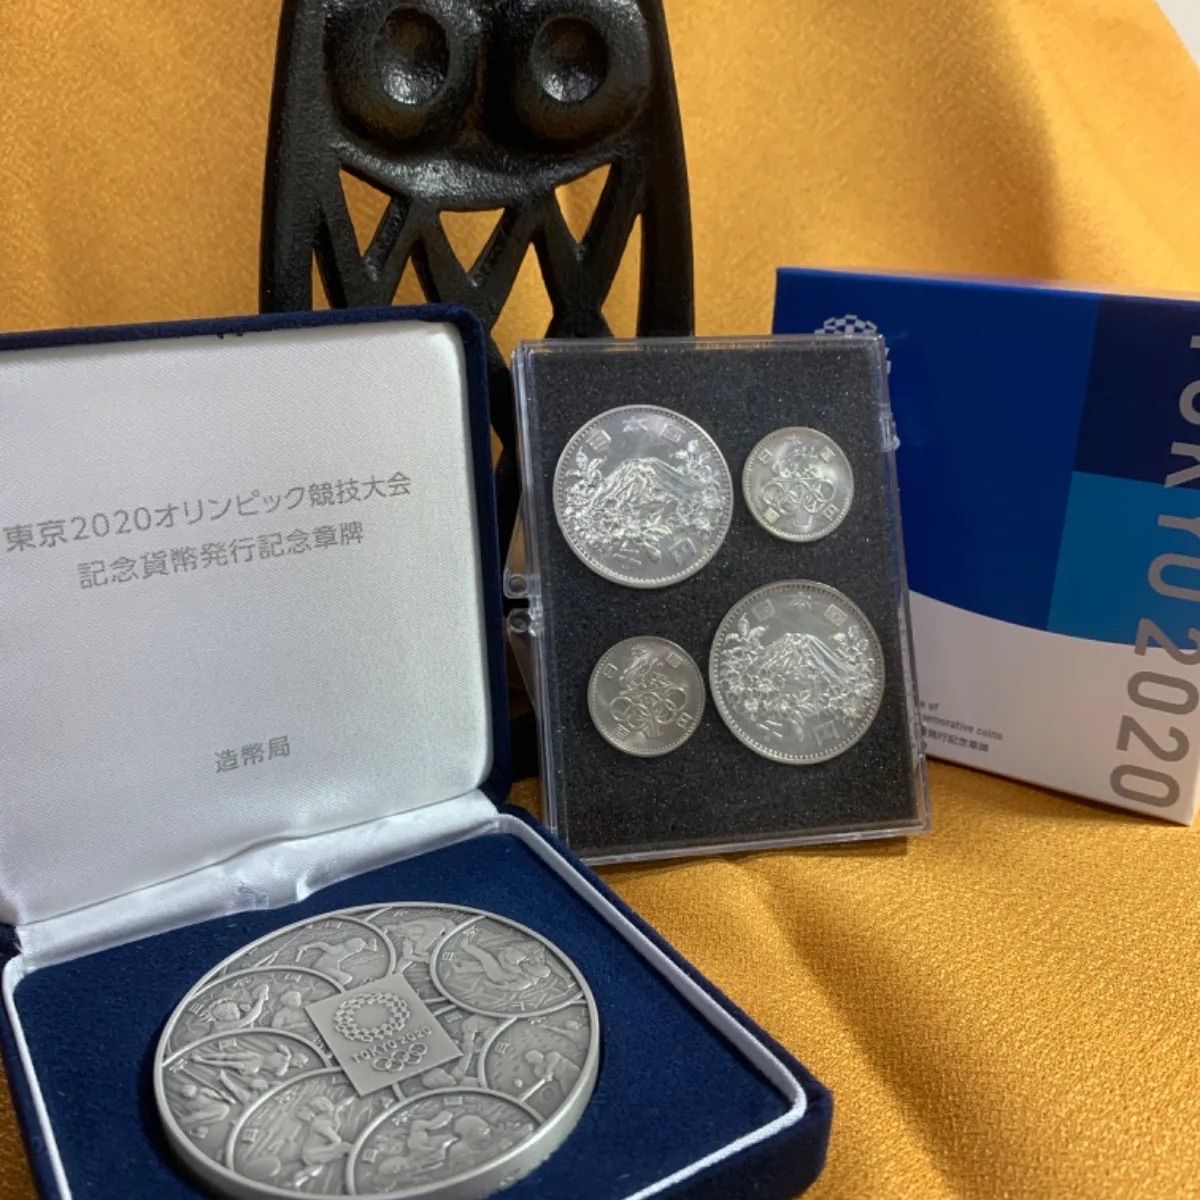 東京2020オリンピック競技大会記念貨幣発行記念章